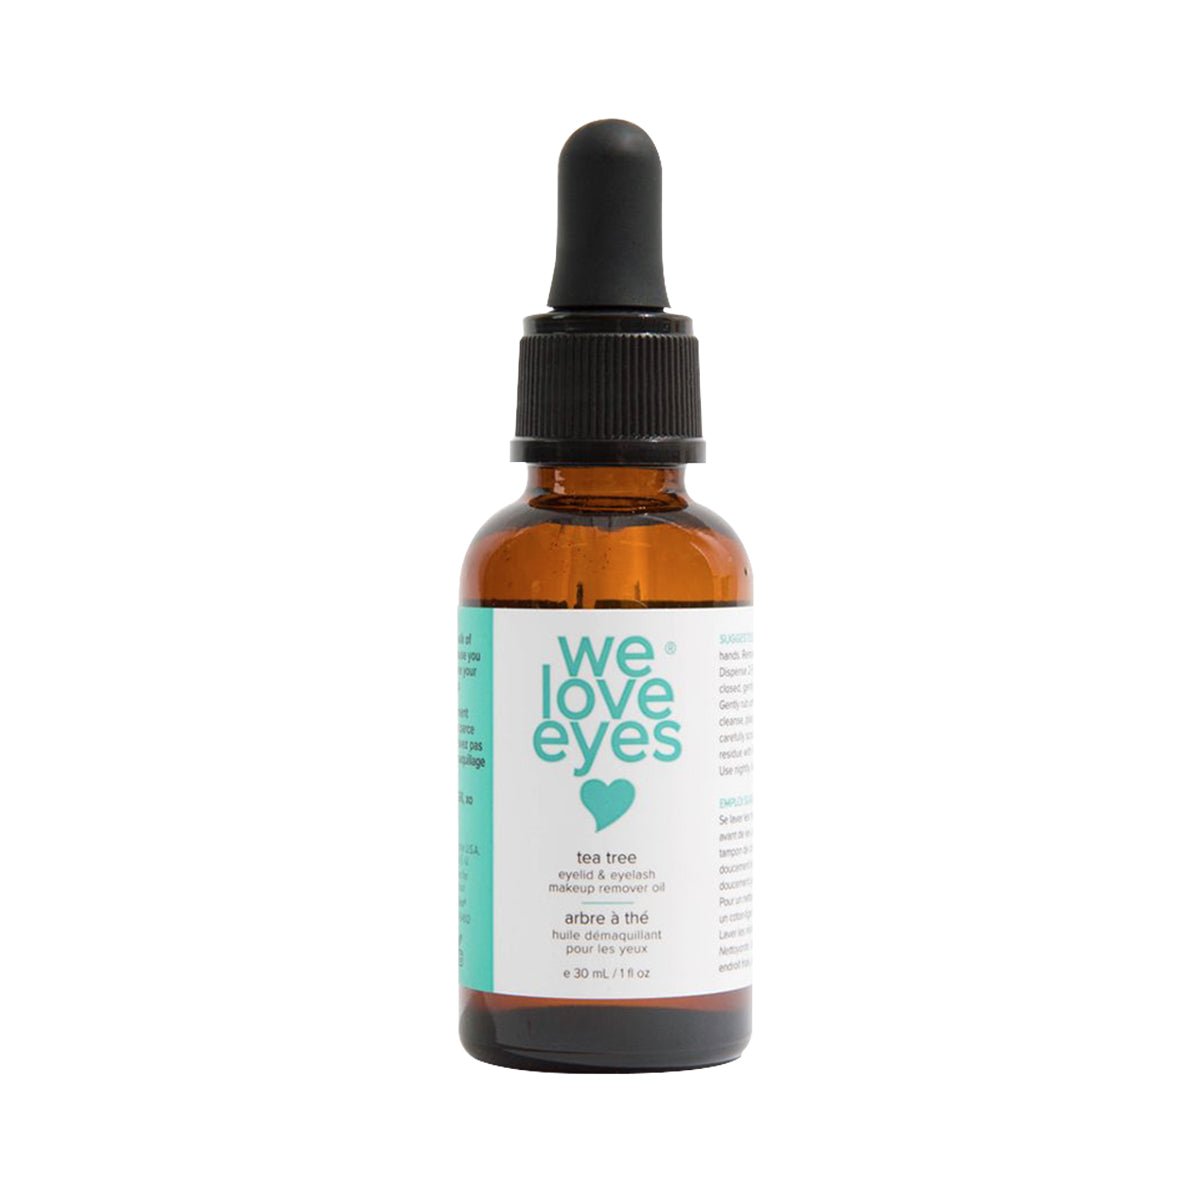 We Love Eyes - 100% All Natural Tea Tree Makeup Remover Oil - Effortlessly remove waterproof makeup and eyeliner. 30mL - Dryeye Rescue